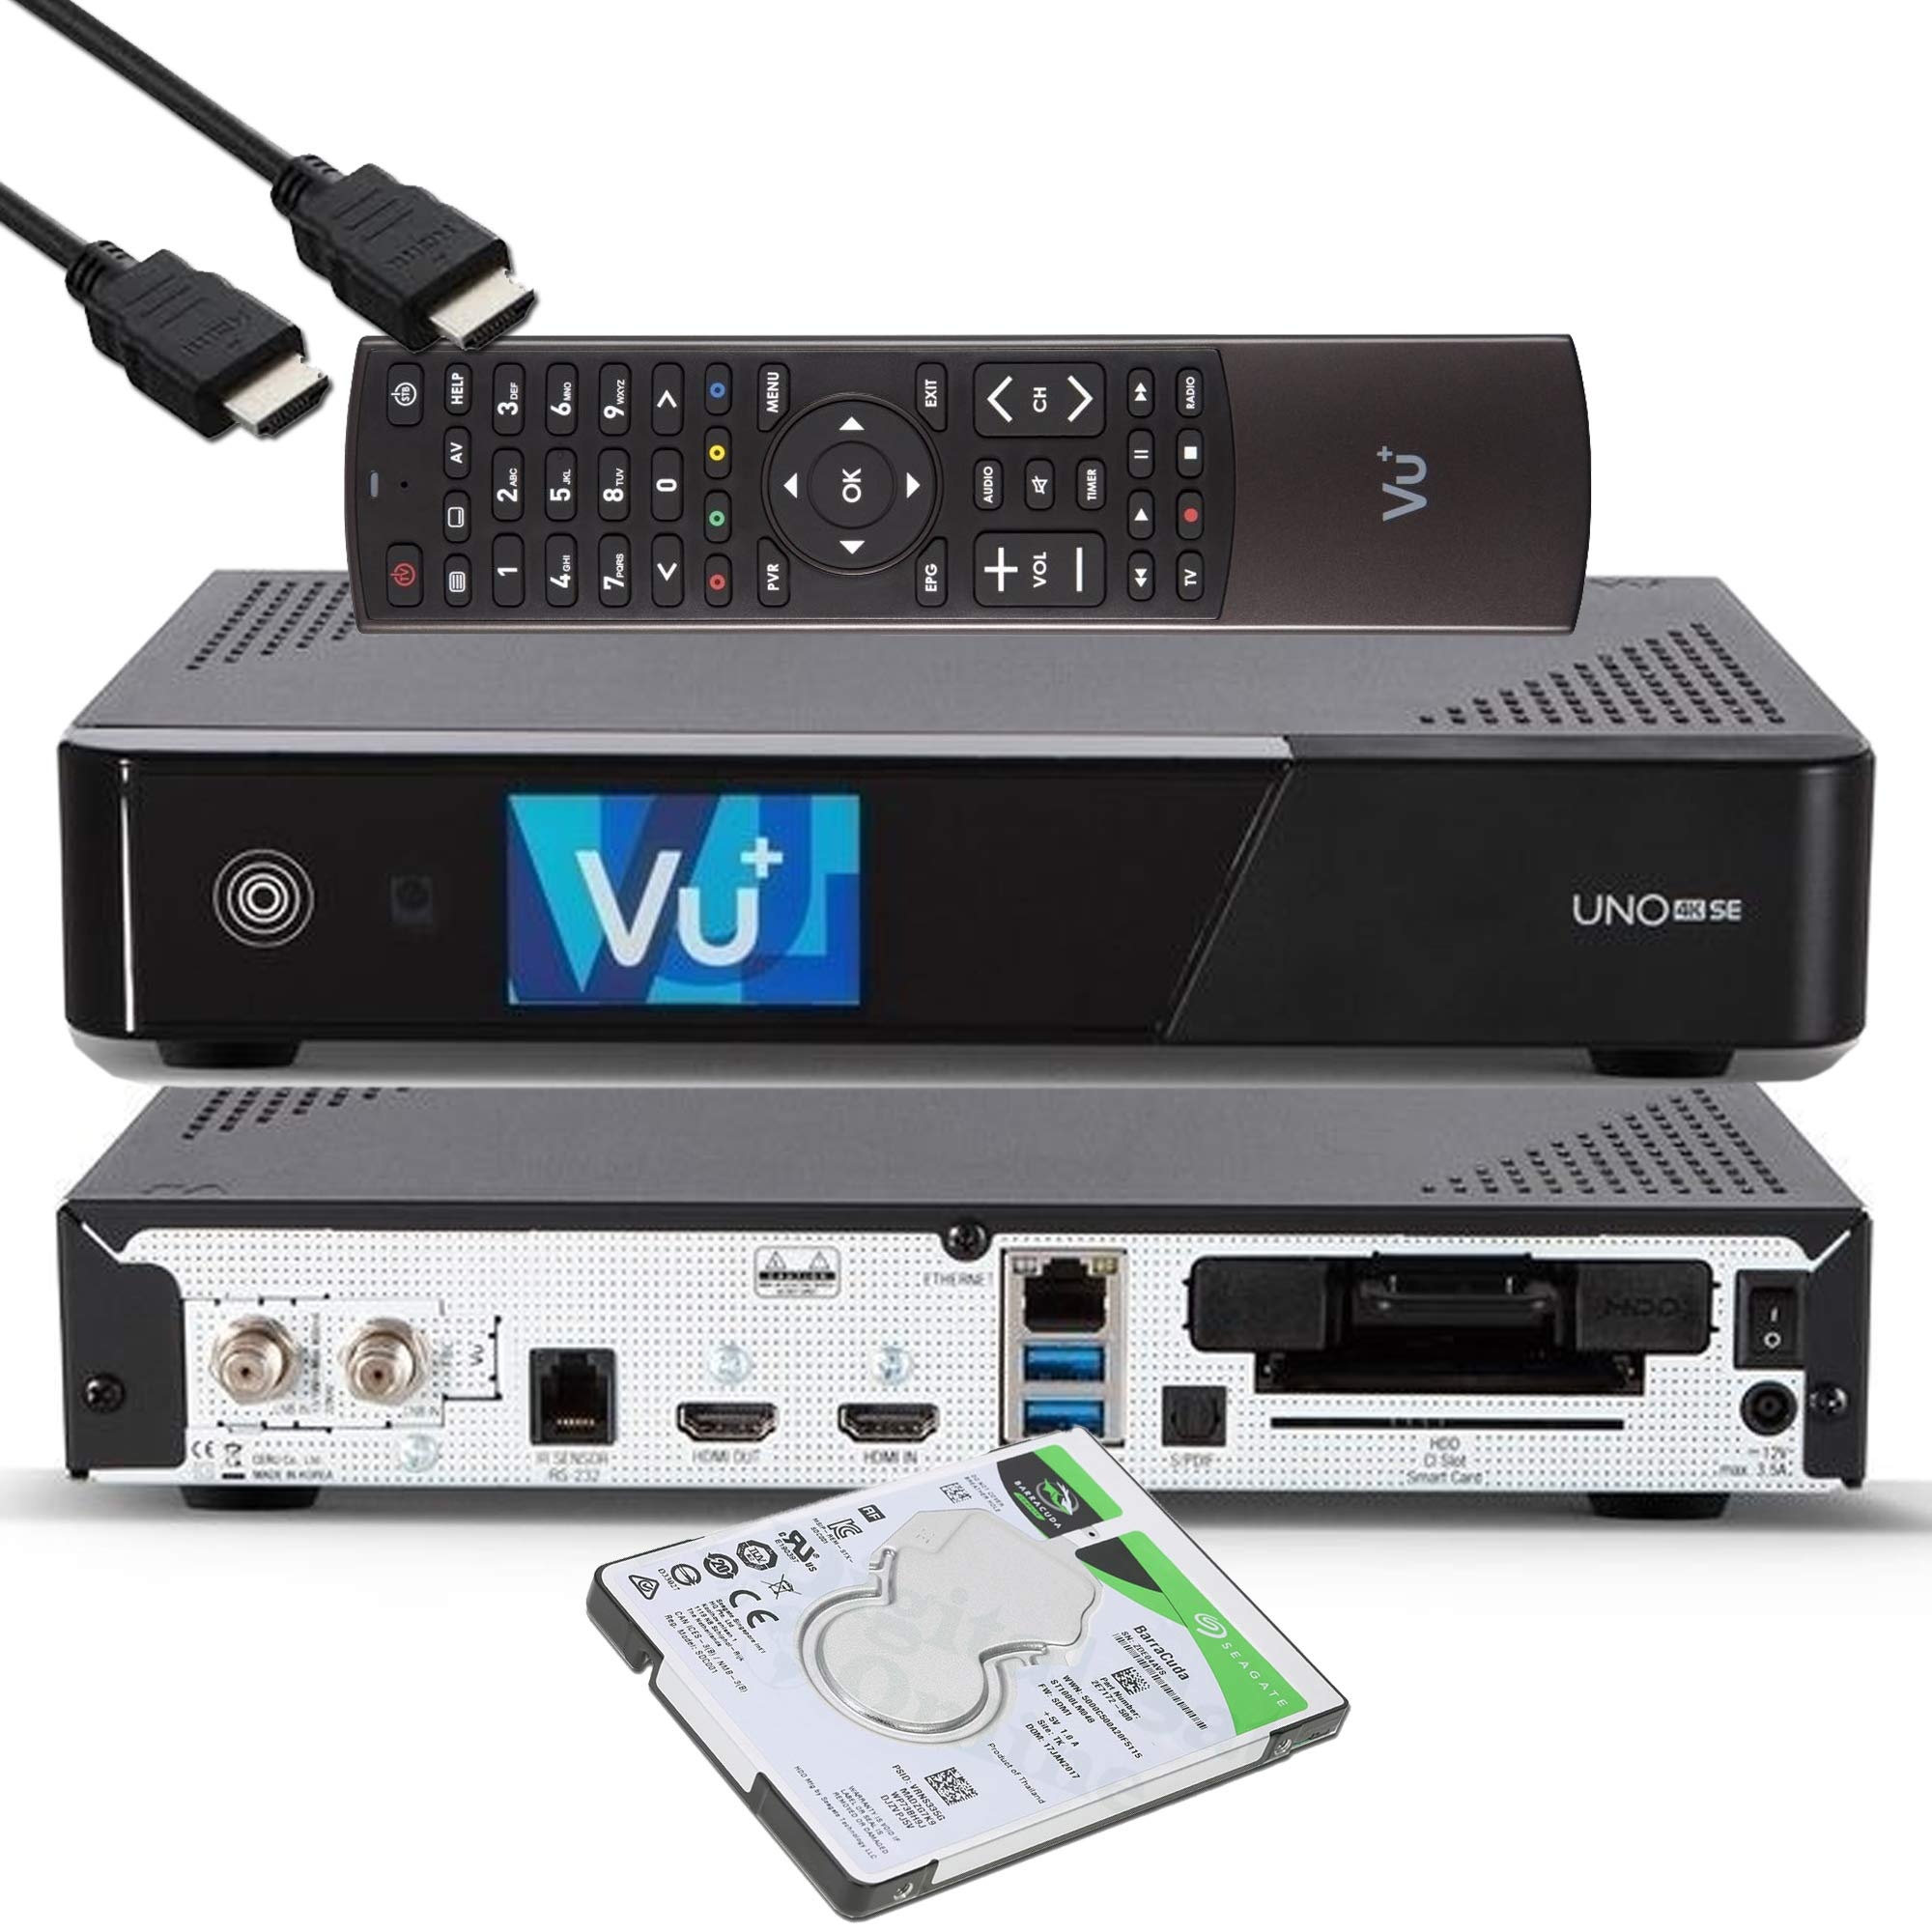 VU+ UNO 4K SE - UHD HDR 1x DVB-S2 FBC Sat Twin Tuner E2 Linux Receiver, YouTube, Satellit Festplattenreceiver, CI + Kartenleser, Media Player, USB 3.0, EasyMouse HDMI-Kabel & 2TB HDD Festplatte